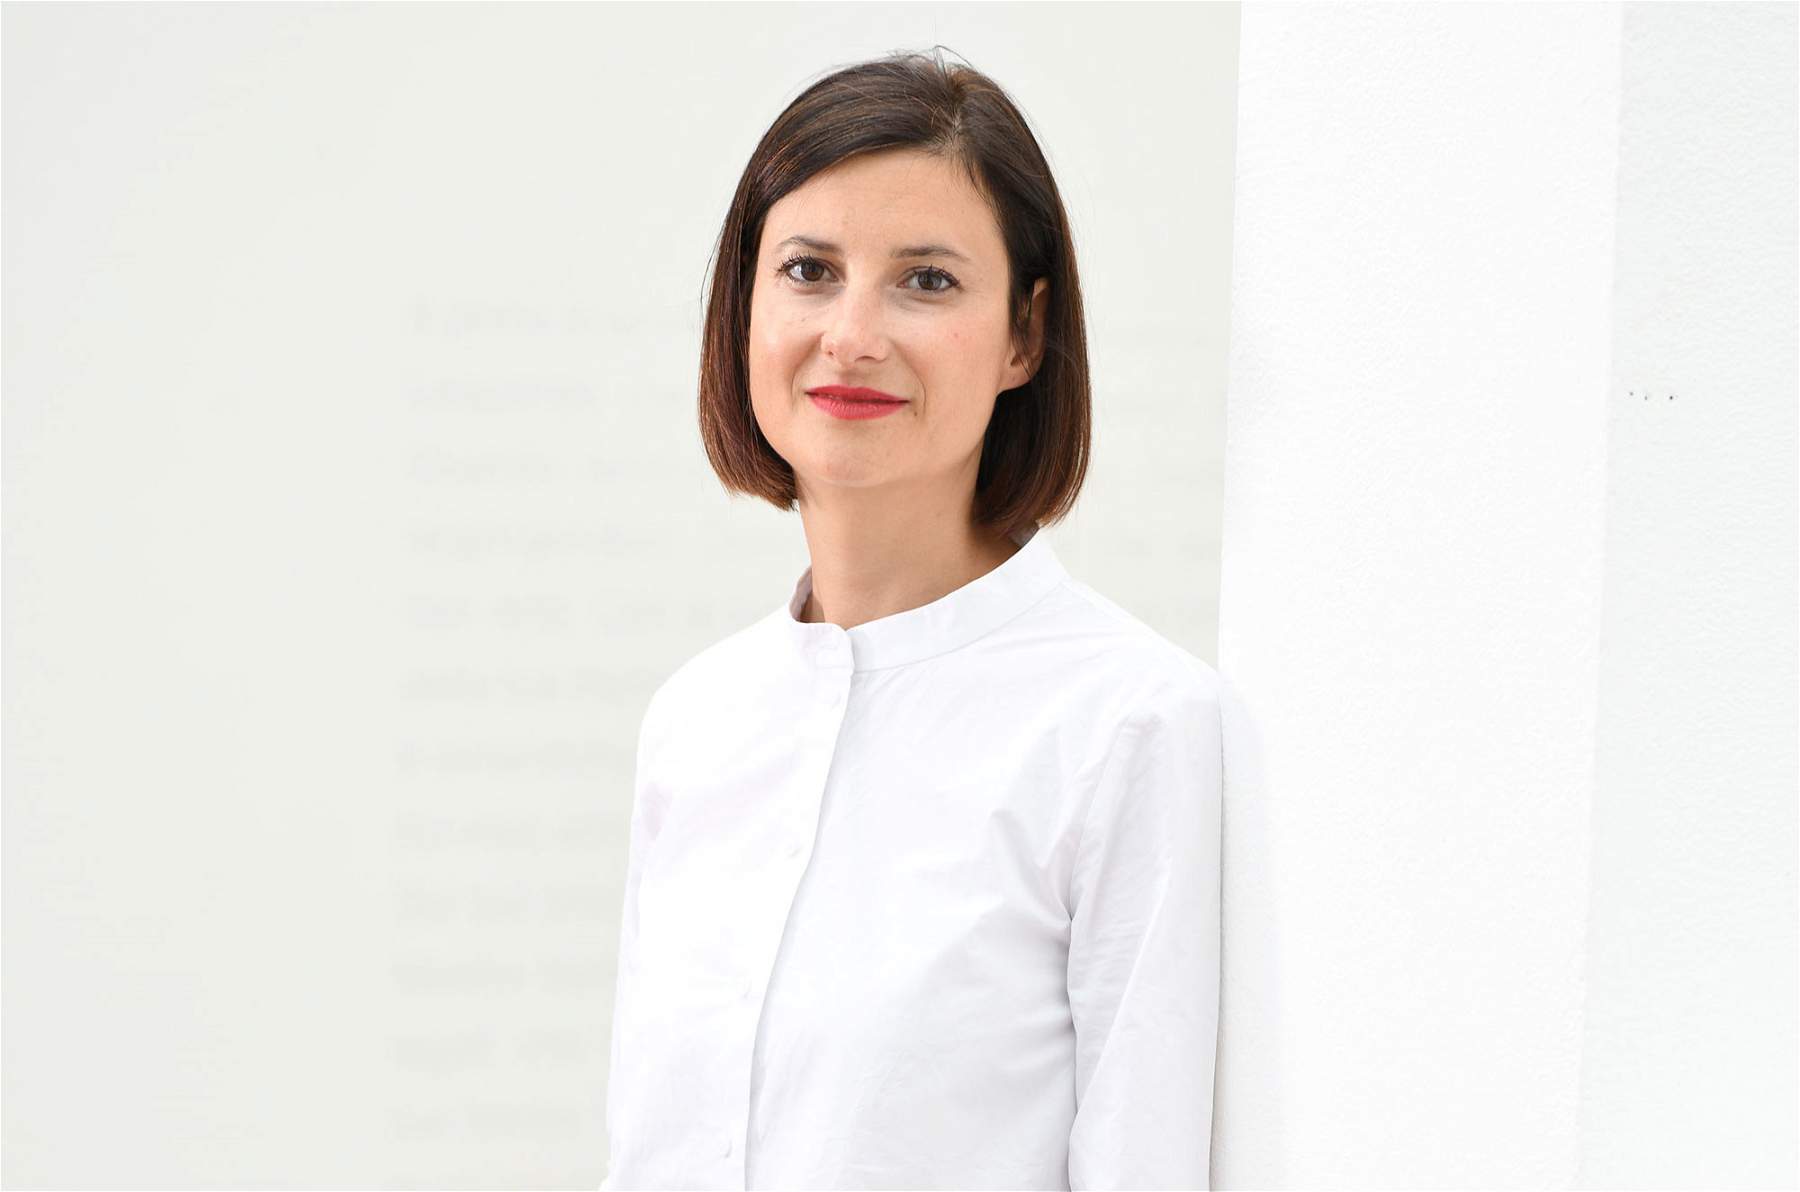 Merano Kunsthaus has a new, young director: she is Martina Oberprantacher